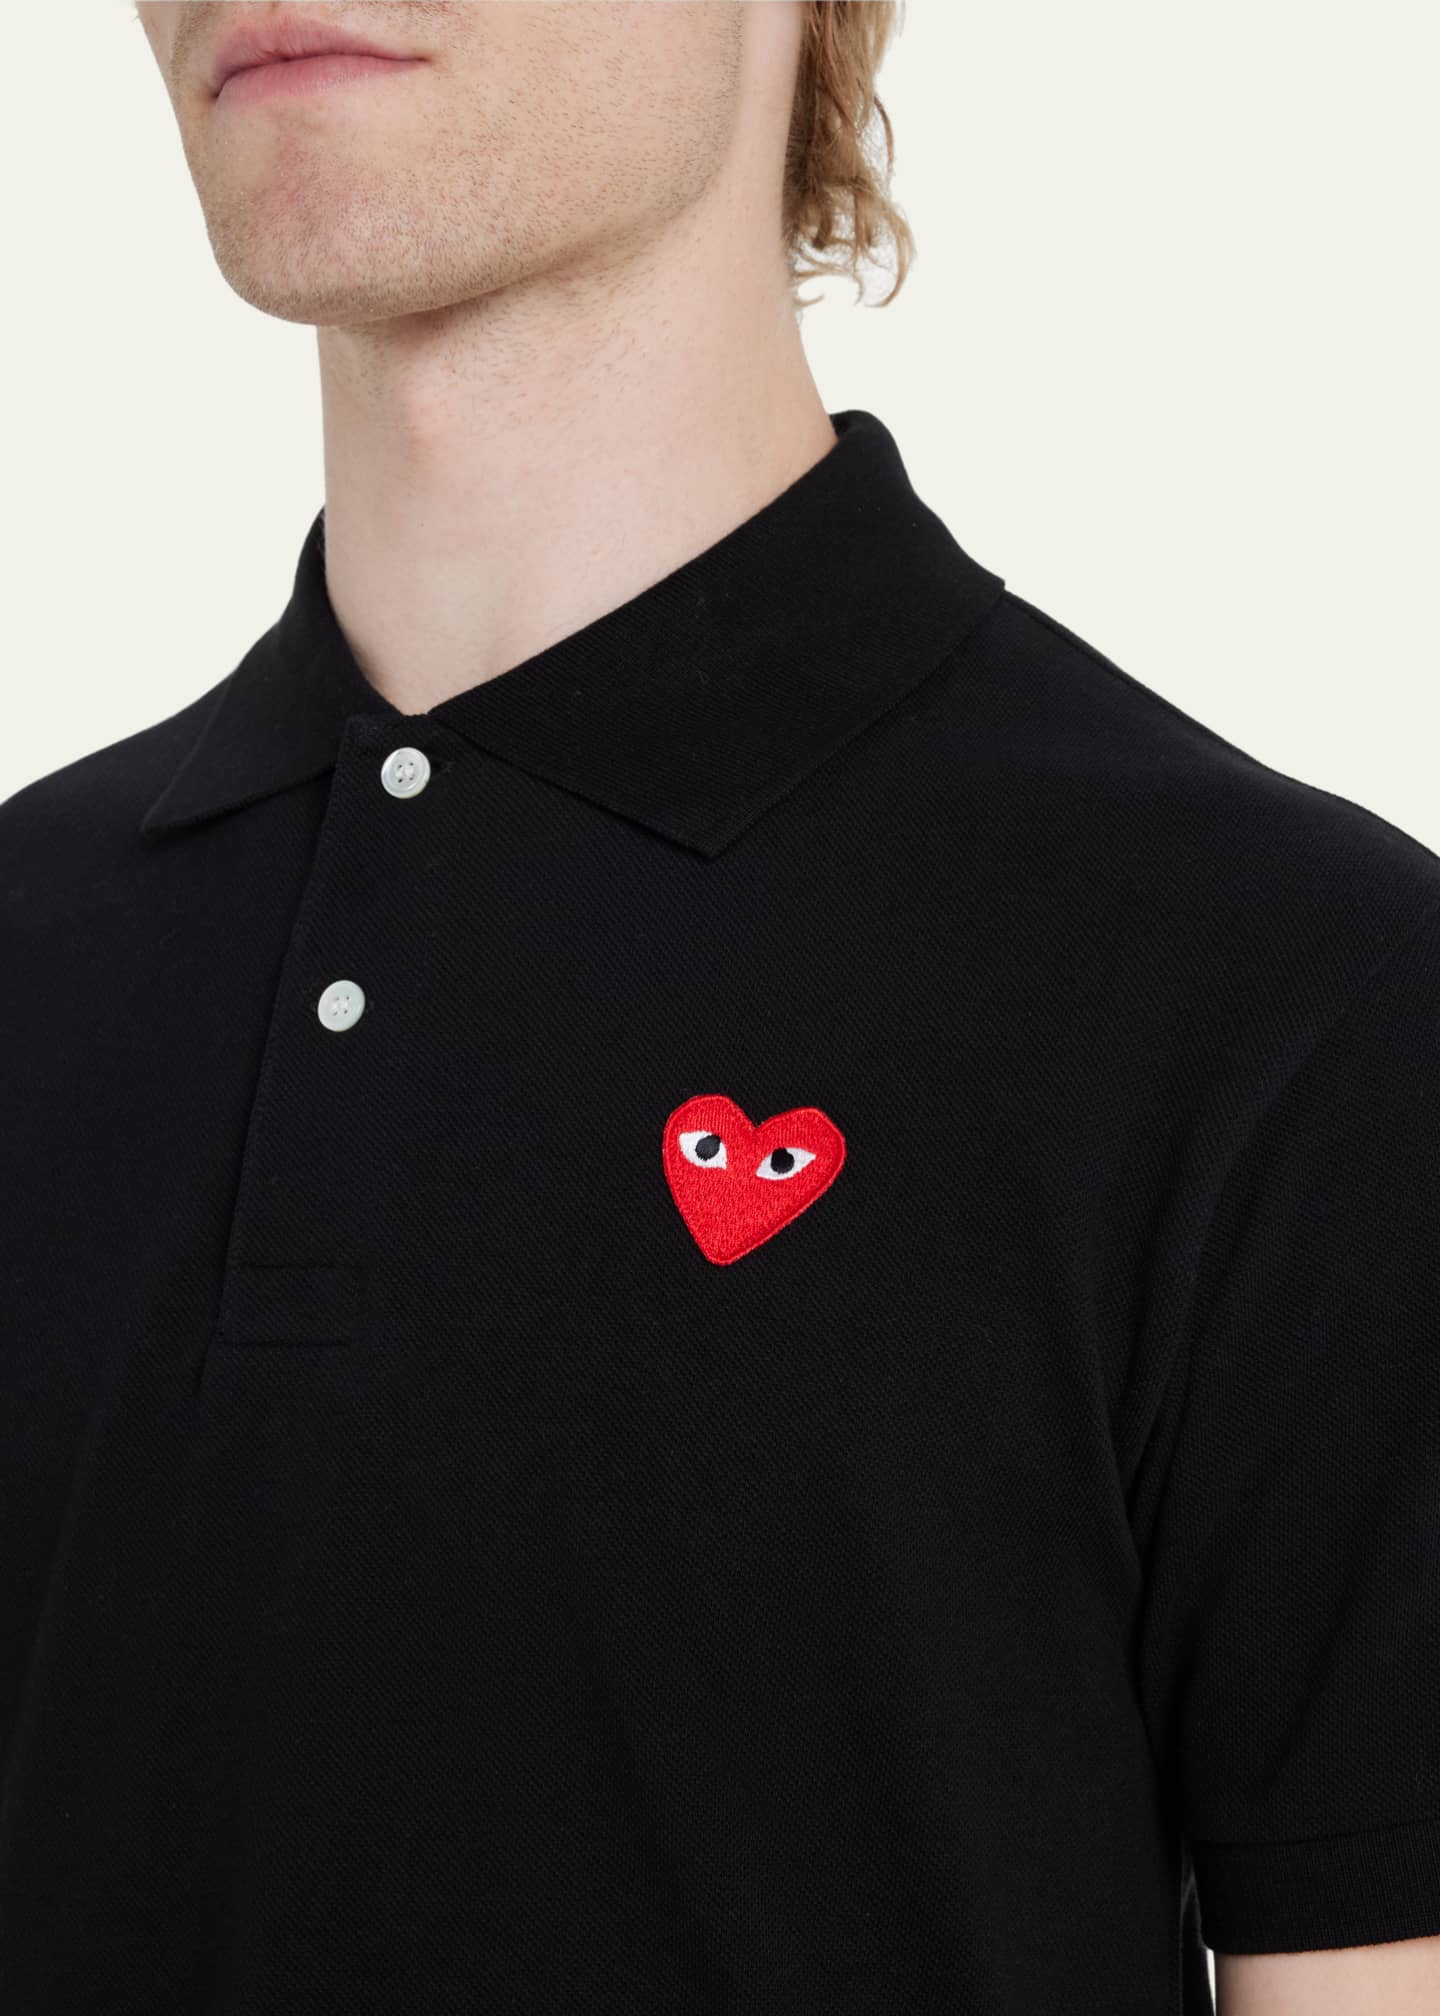 Comme des Garcons Men's Polo Shirt with Heart - Bergdorf Goodman